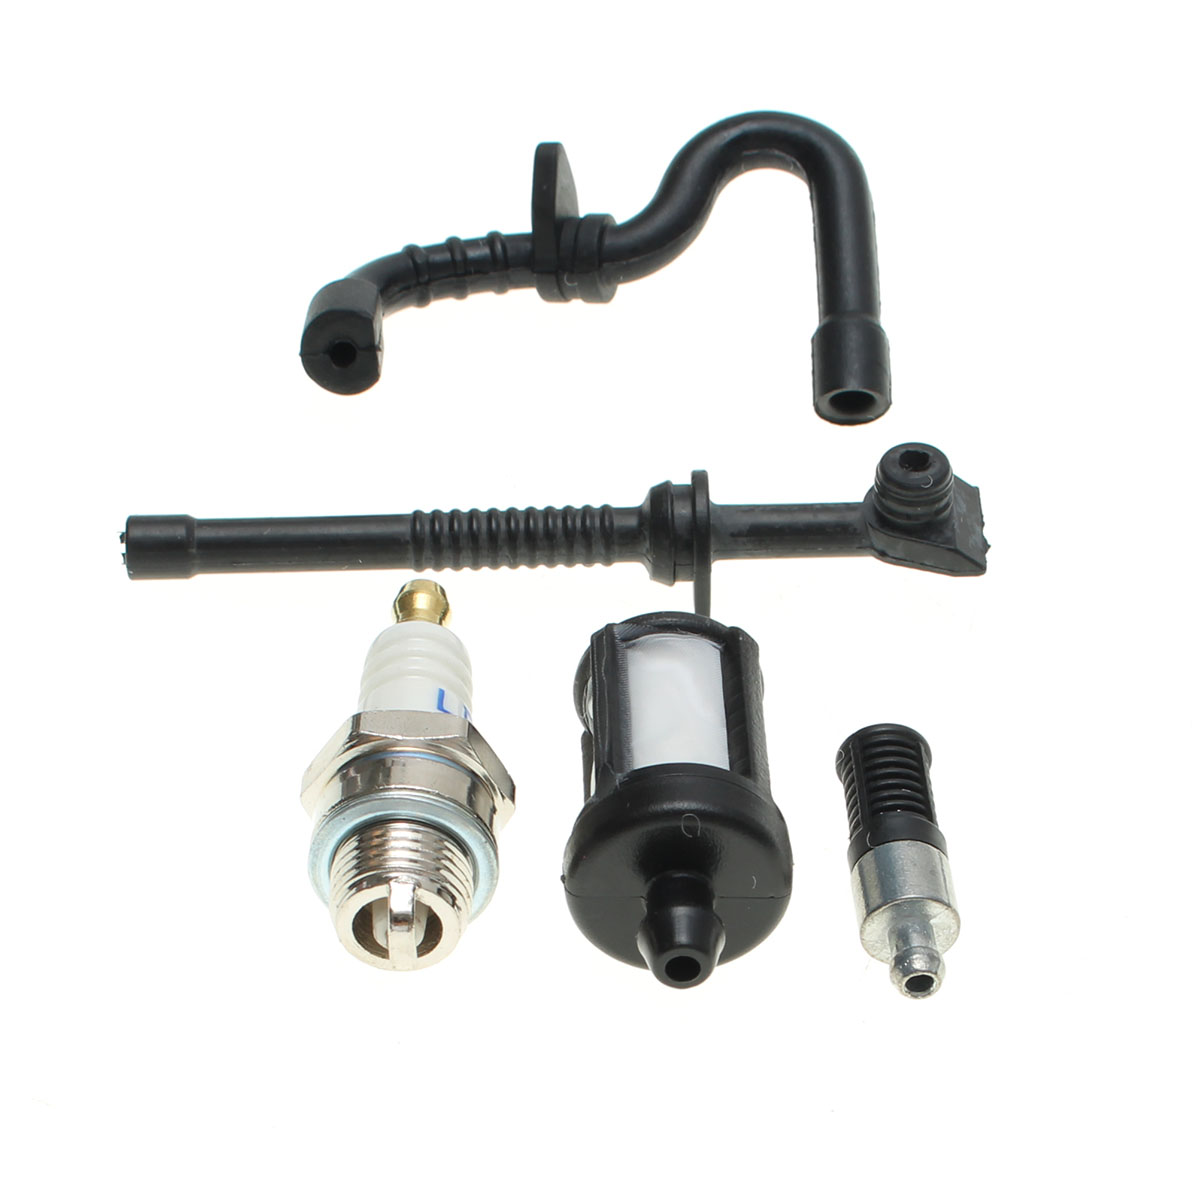 

Air Fuel Oil Filter Hose Spark Plug Kit For STIHL 017 018 MS170 MS180